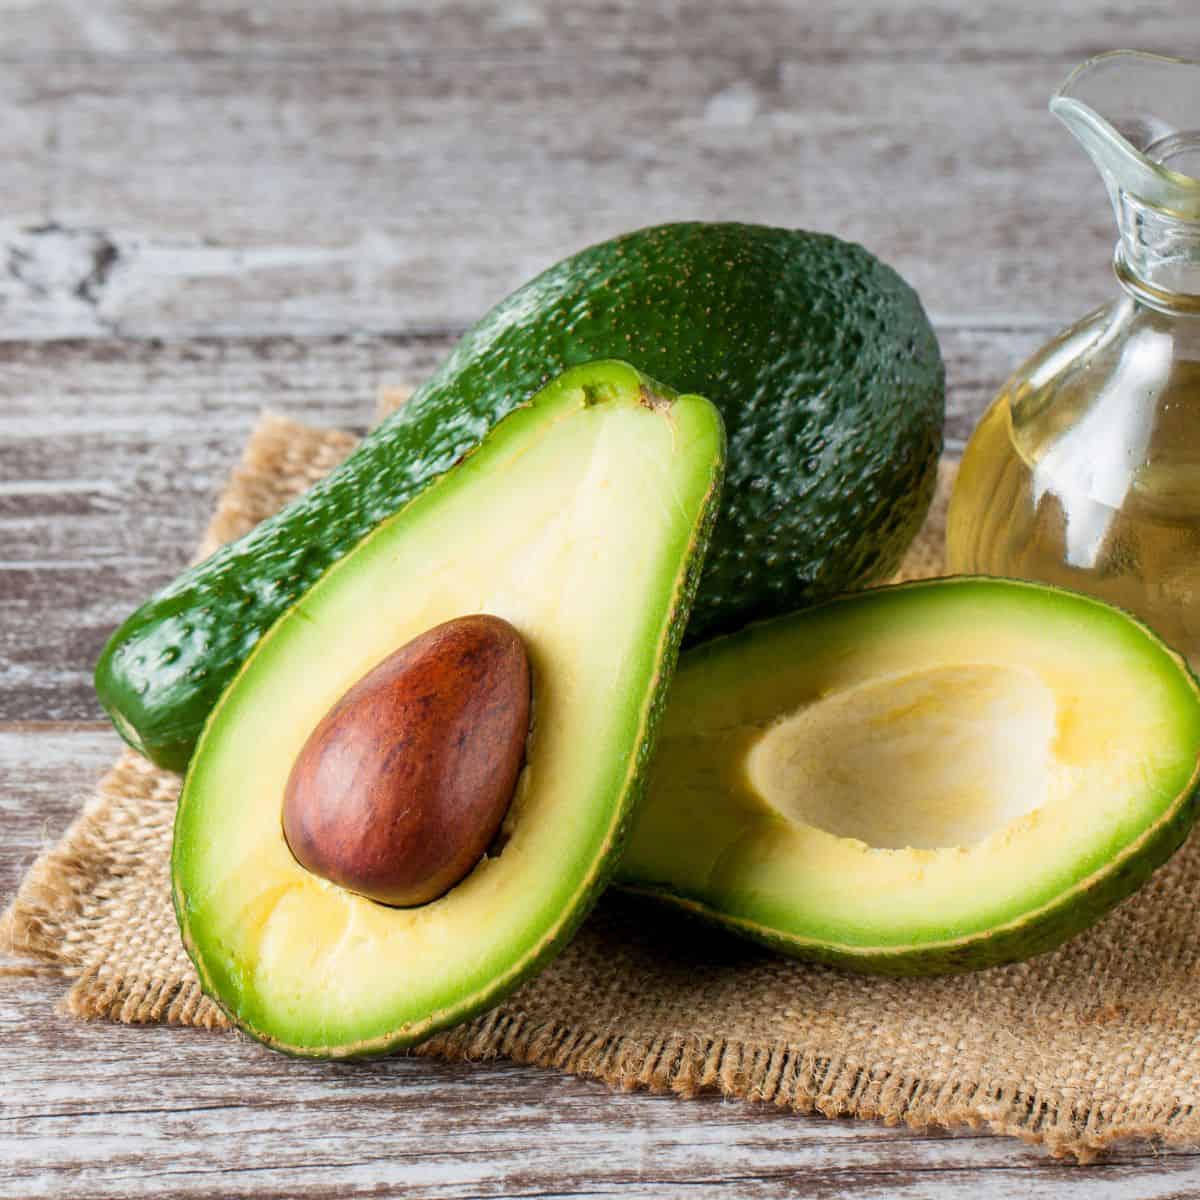 Avocado nutrition, health, and beauty benefits